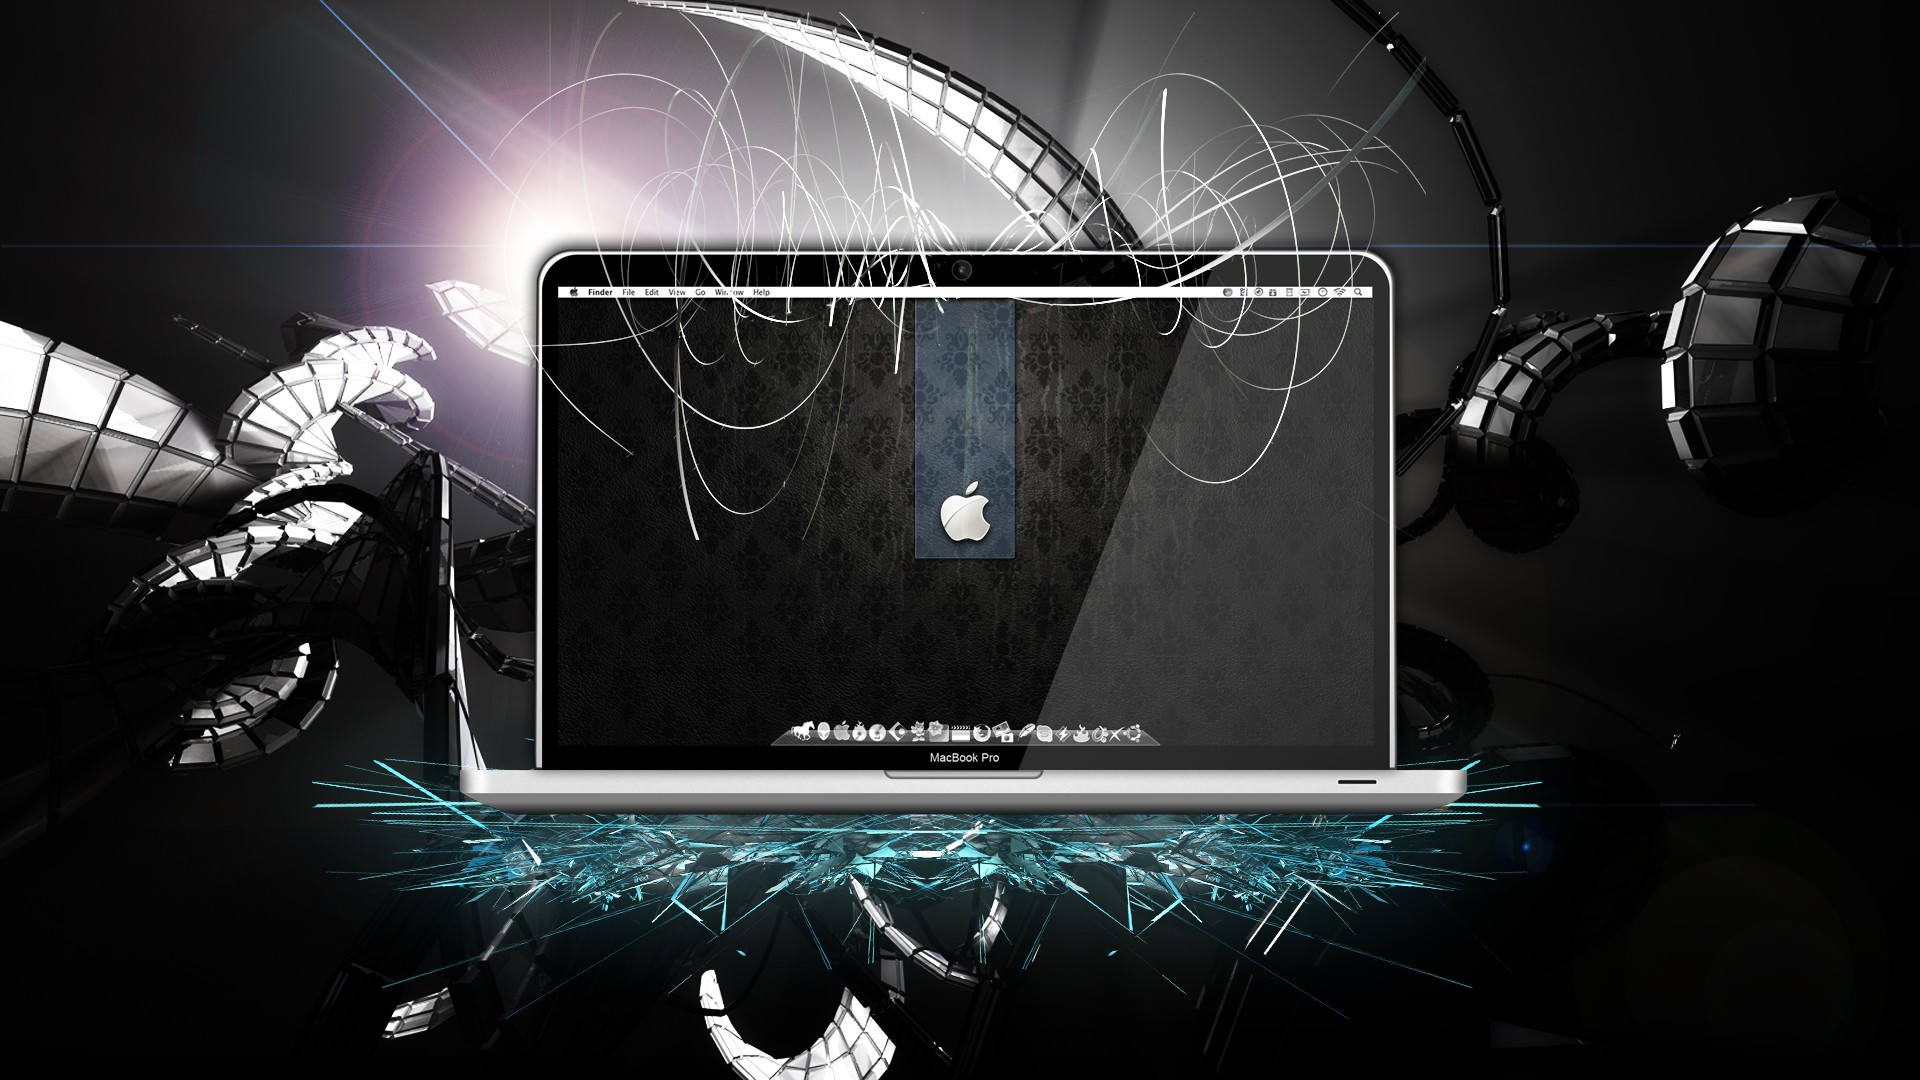 New Apple Hd Wallpaper Download For Macbook - 1920x1080 Wallpaper -  